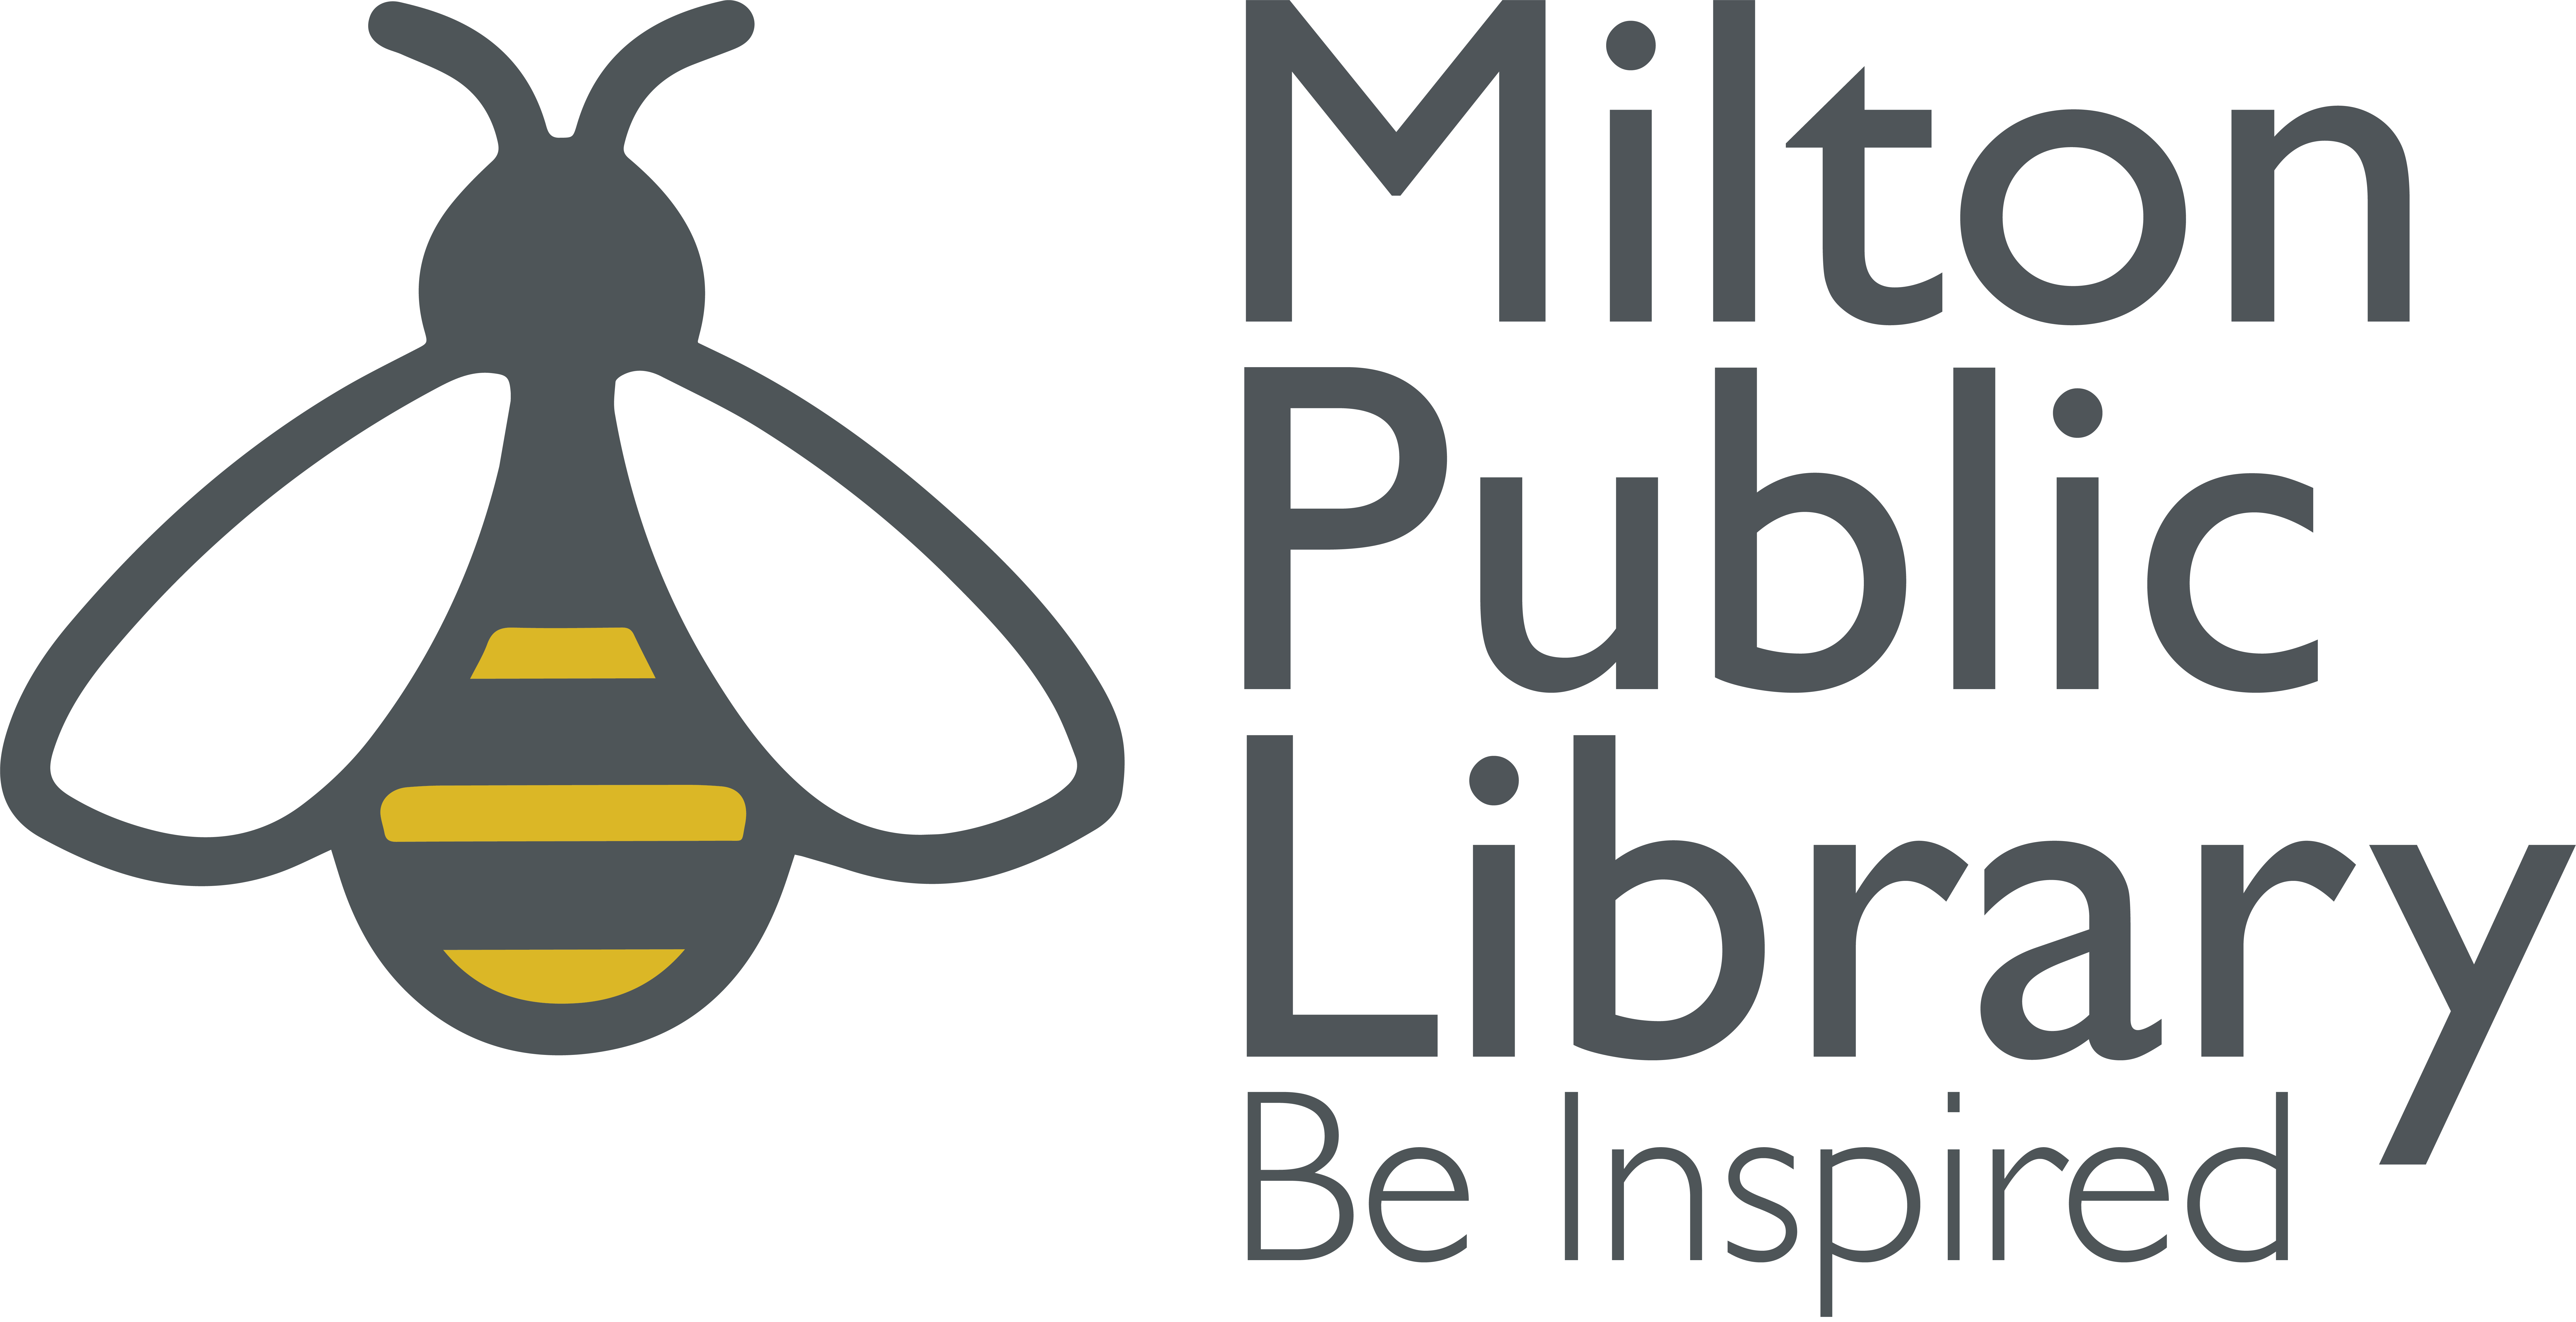 Milton Public Library Logo